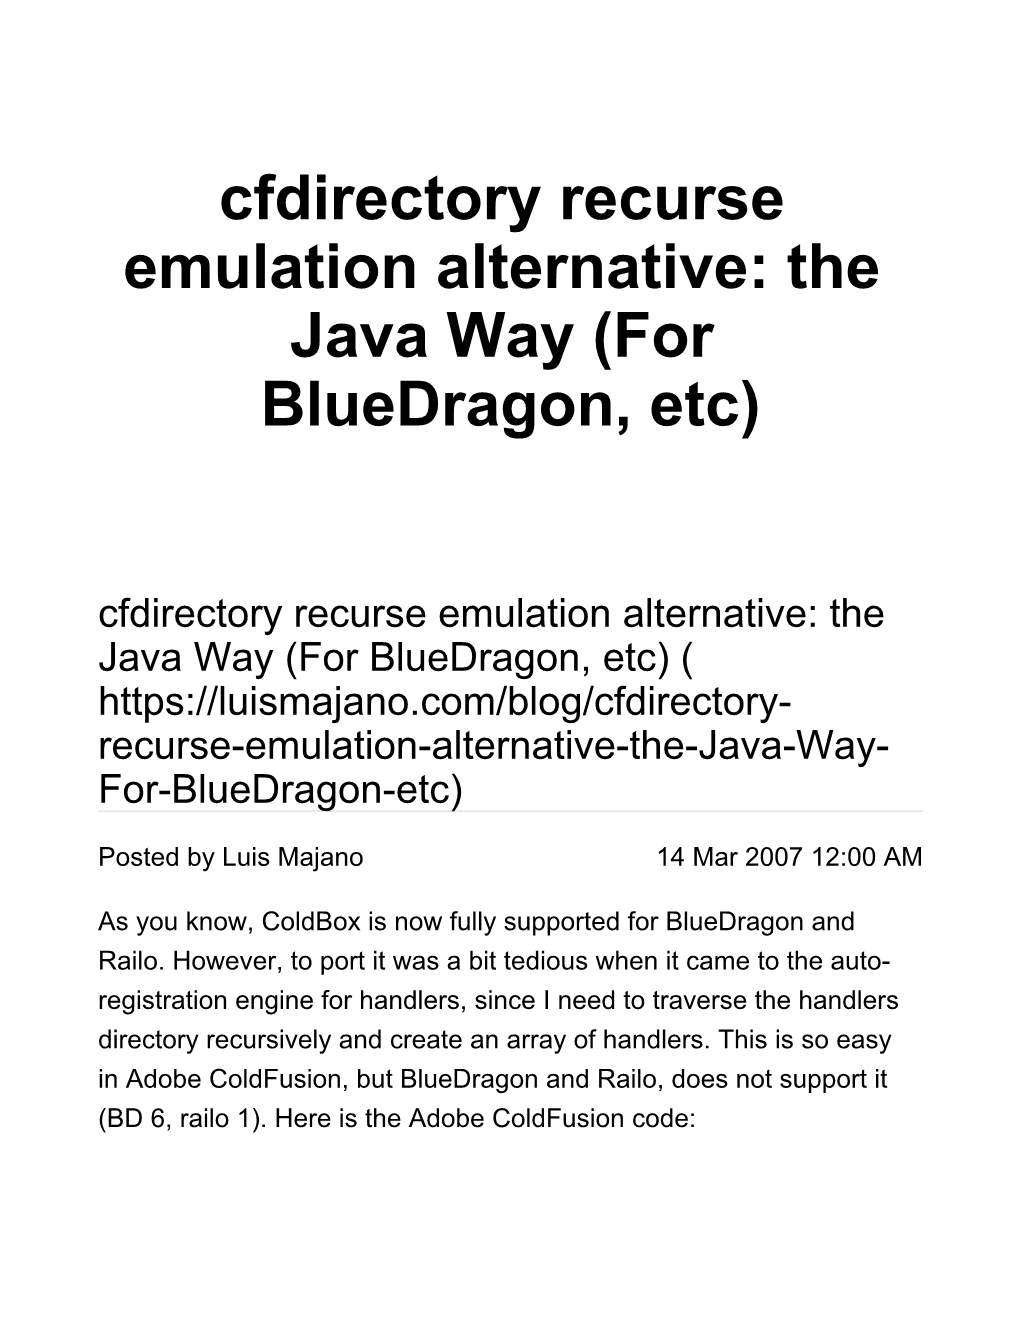 Cfdirectory Recurse Emulation Alternative: the Java Way (For Bluedragon, Etc)